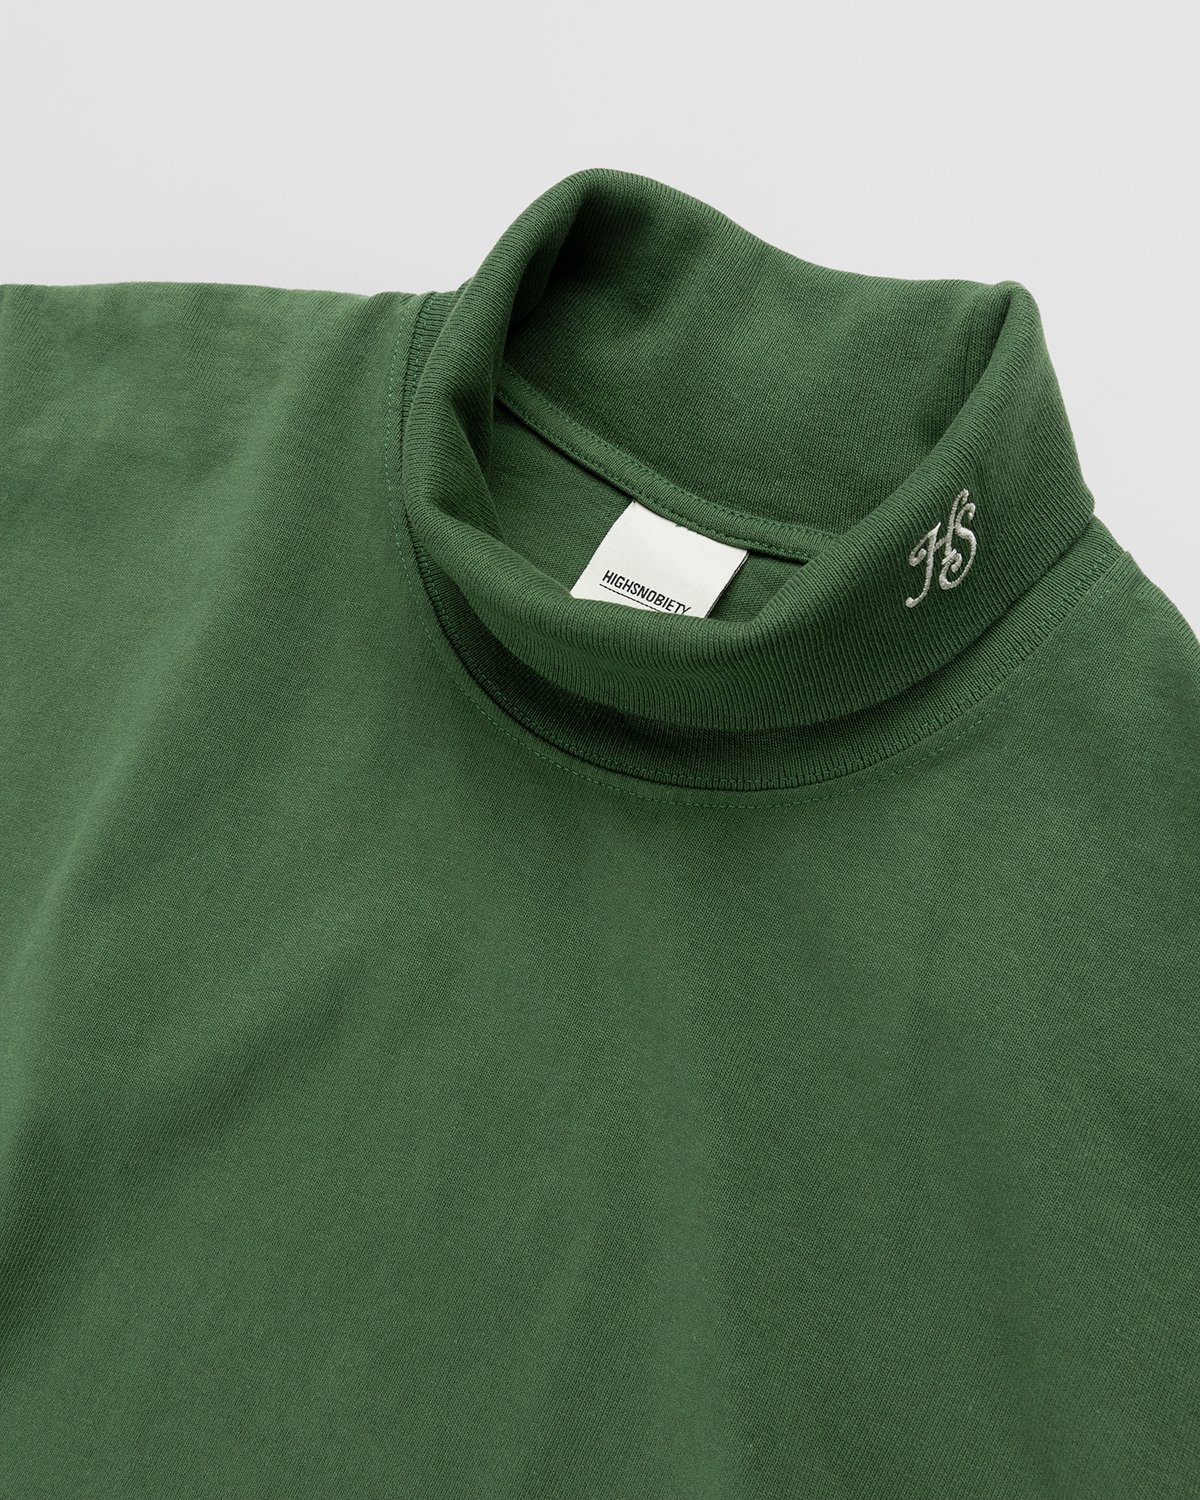 Highsnobiety - Heavy Staples Turtleneck Green - Clothing - Green - Image 7